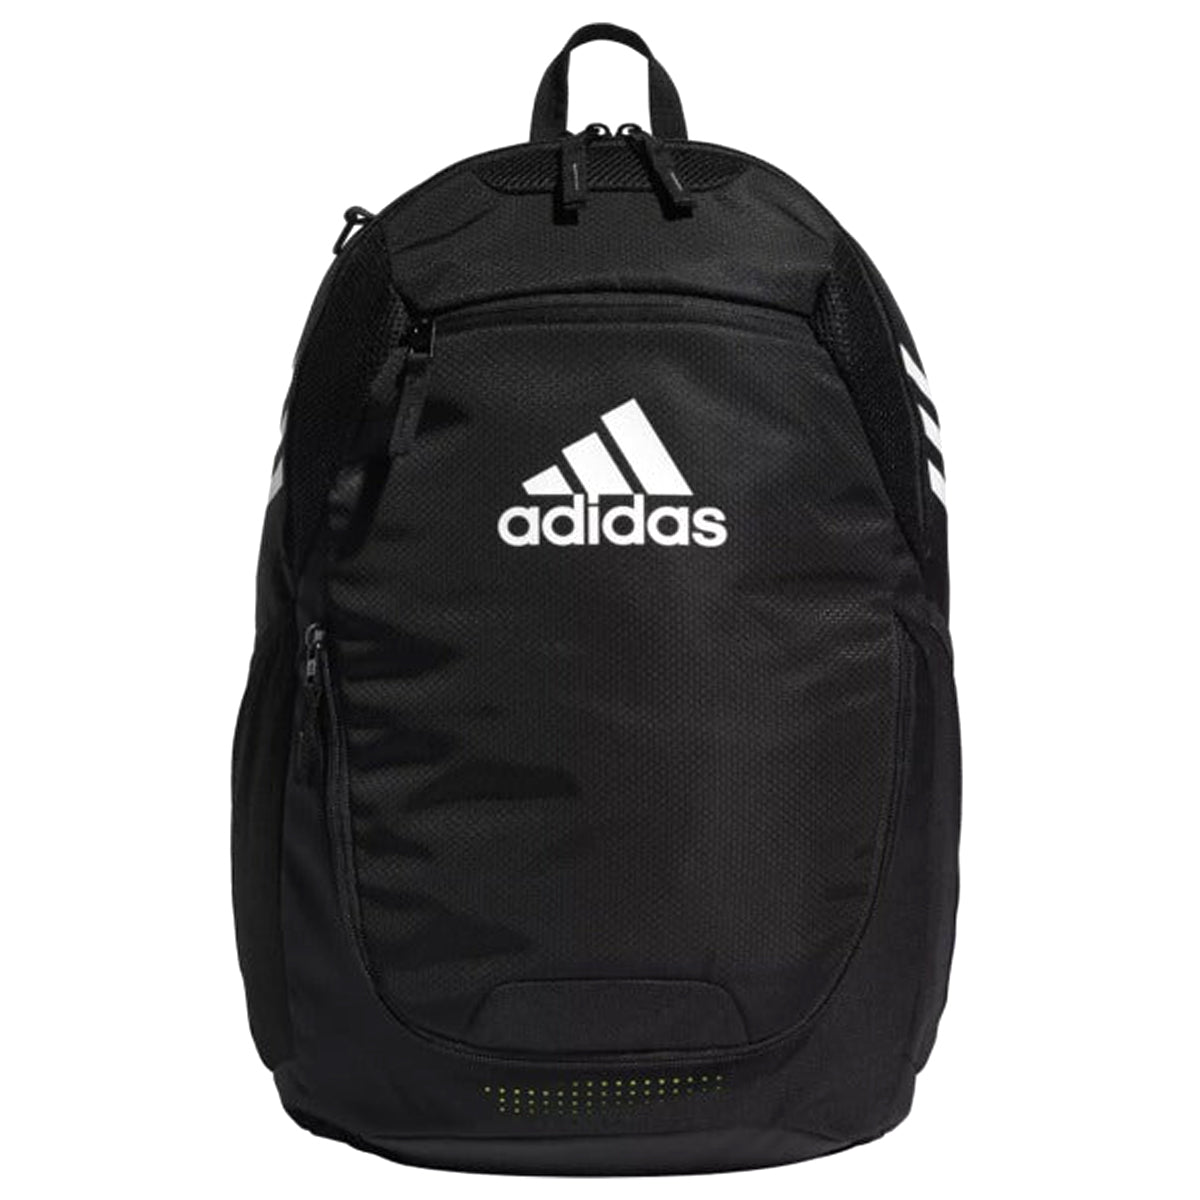 adidas Stadium 3 Soccer Backpack Bags Adidas OSFA Black 